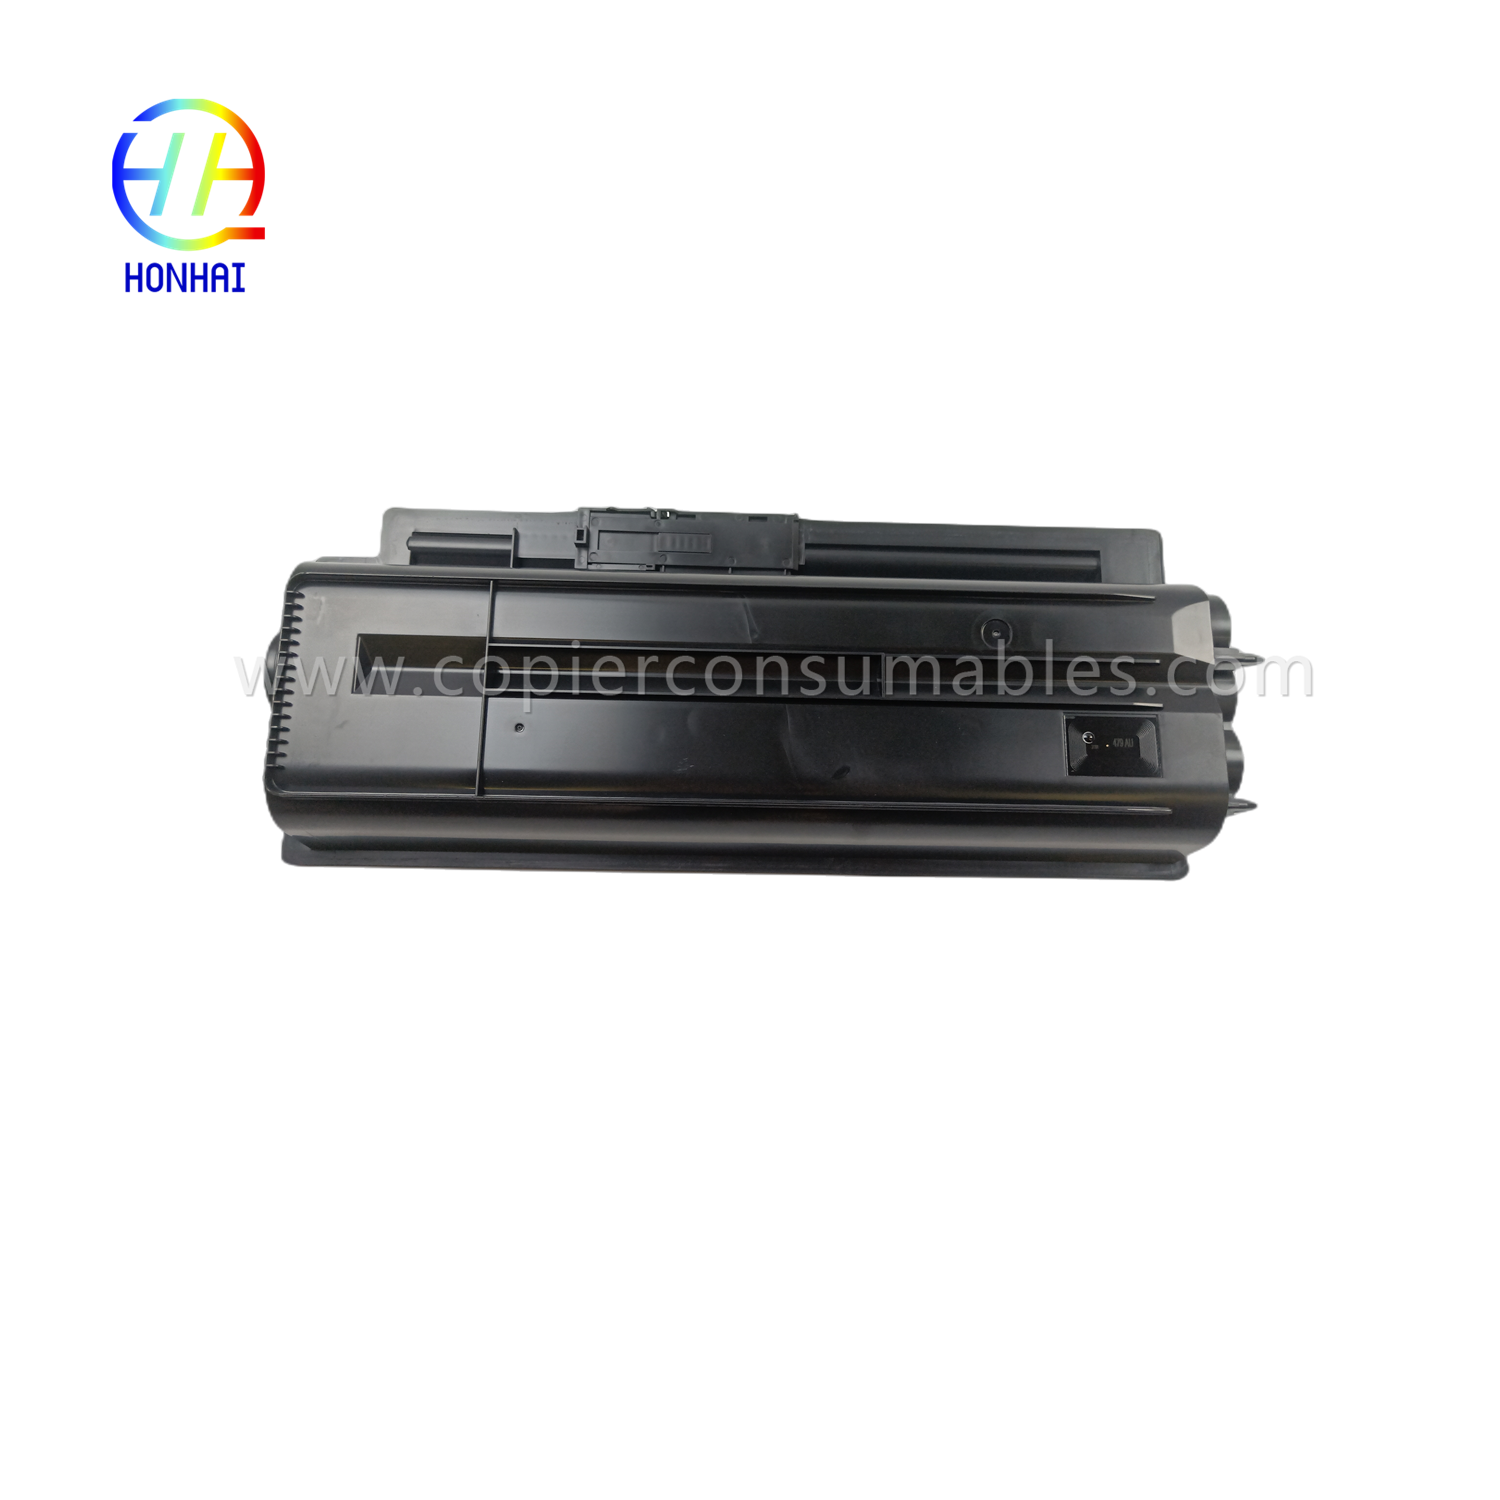 Toner Cartridge Black for Kyocera Tk-479 6025 6030 6525 6530 CS305 CS255 (1)